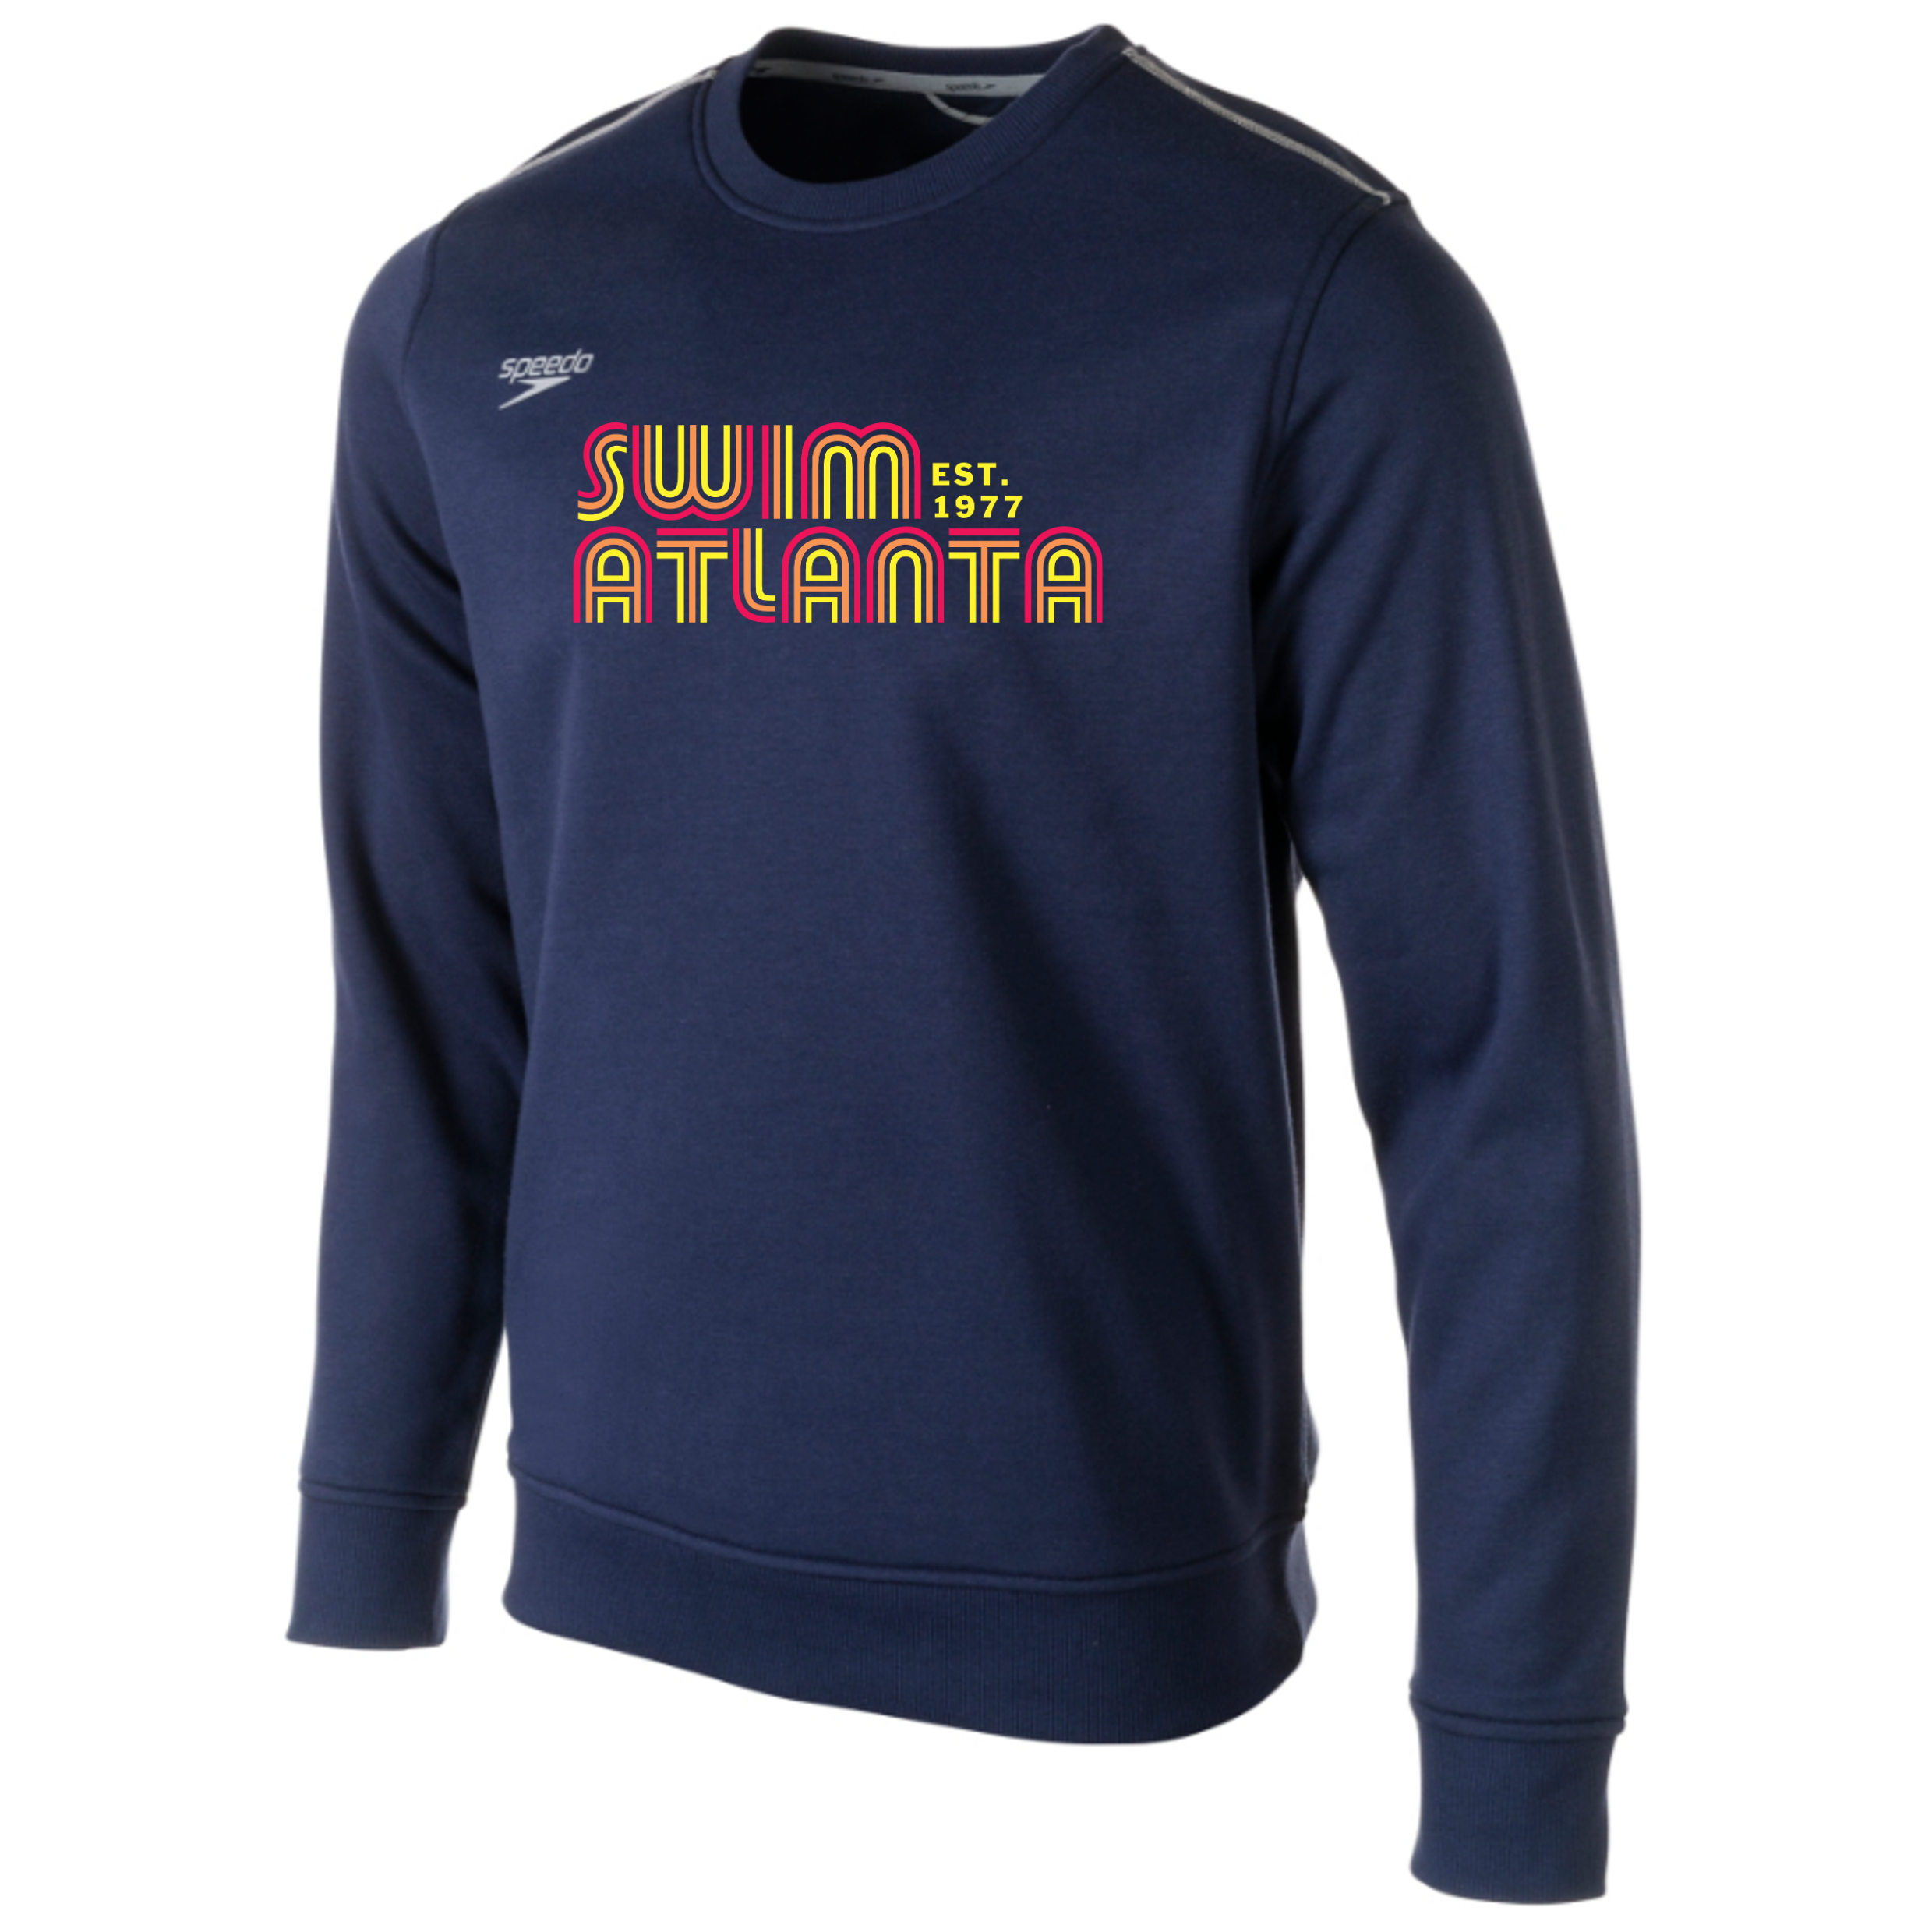 Speedo Fleece Crew Neck Sweatshirt #1 - Swim Atlanta